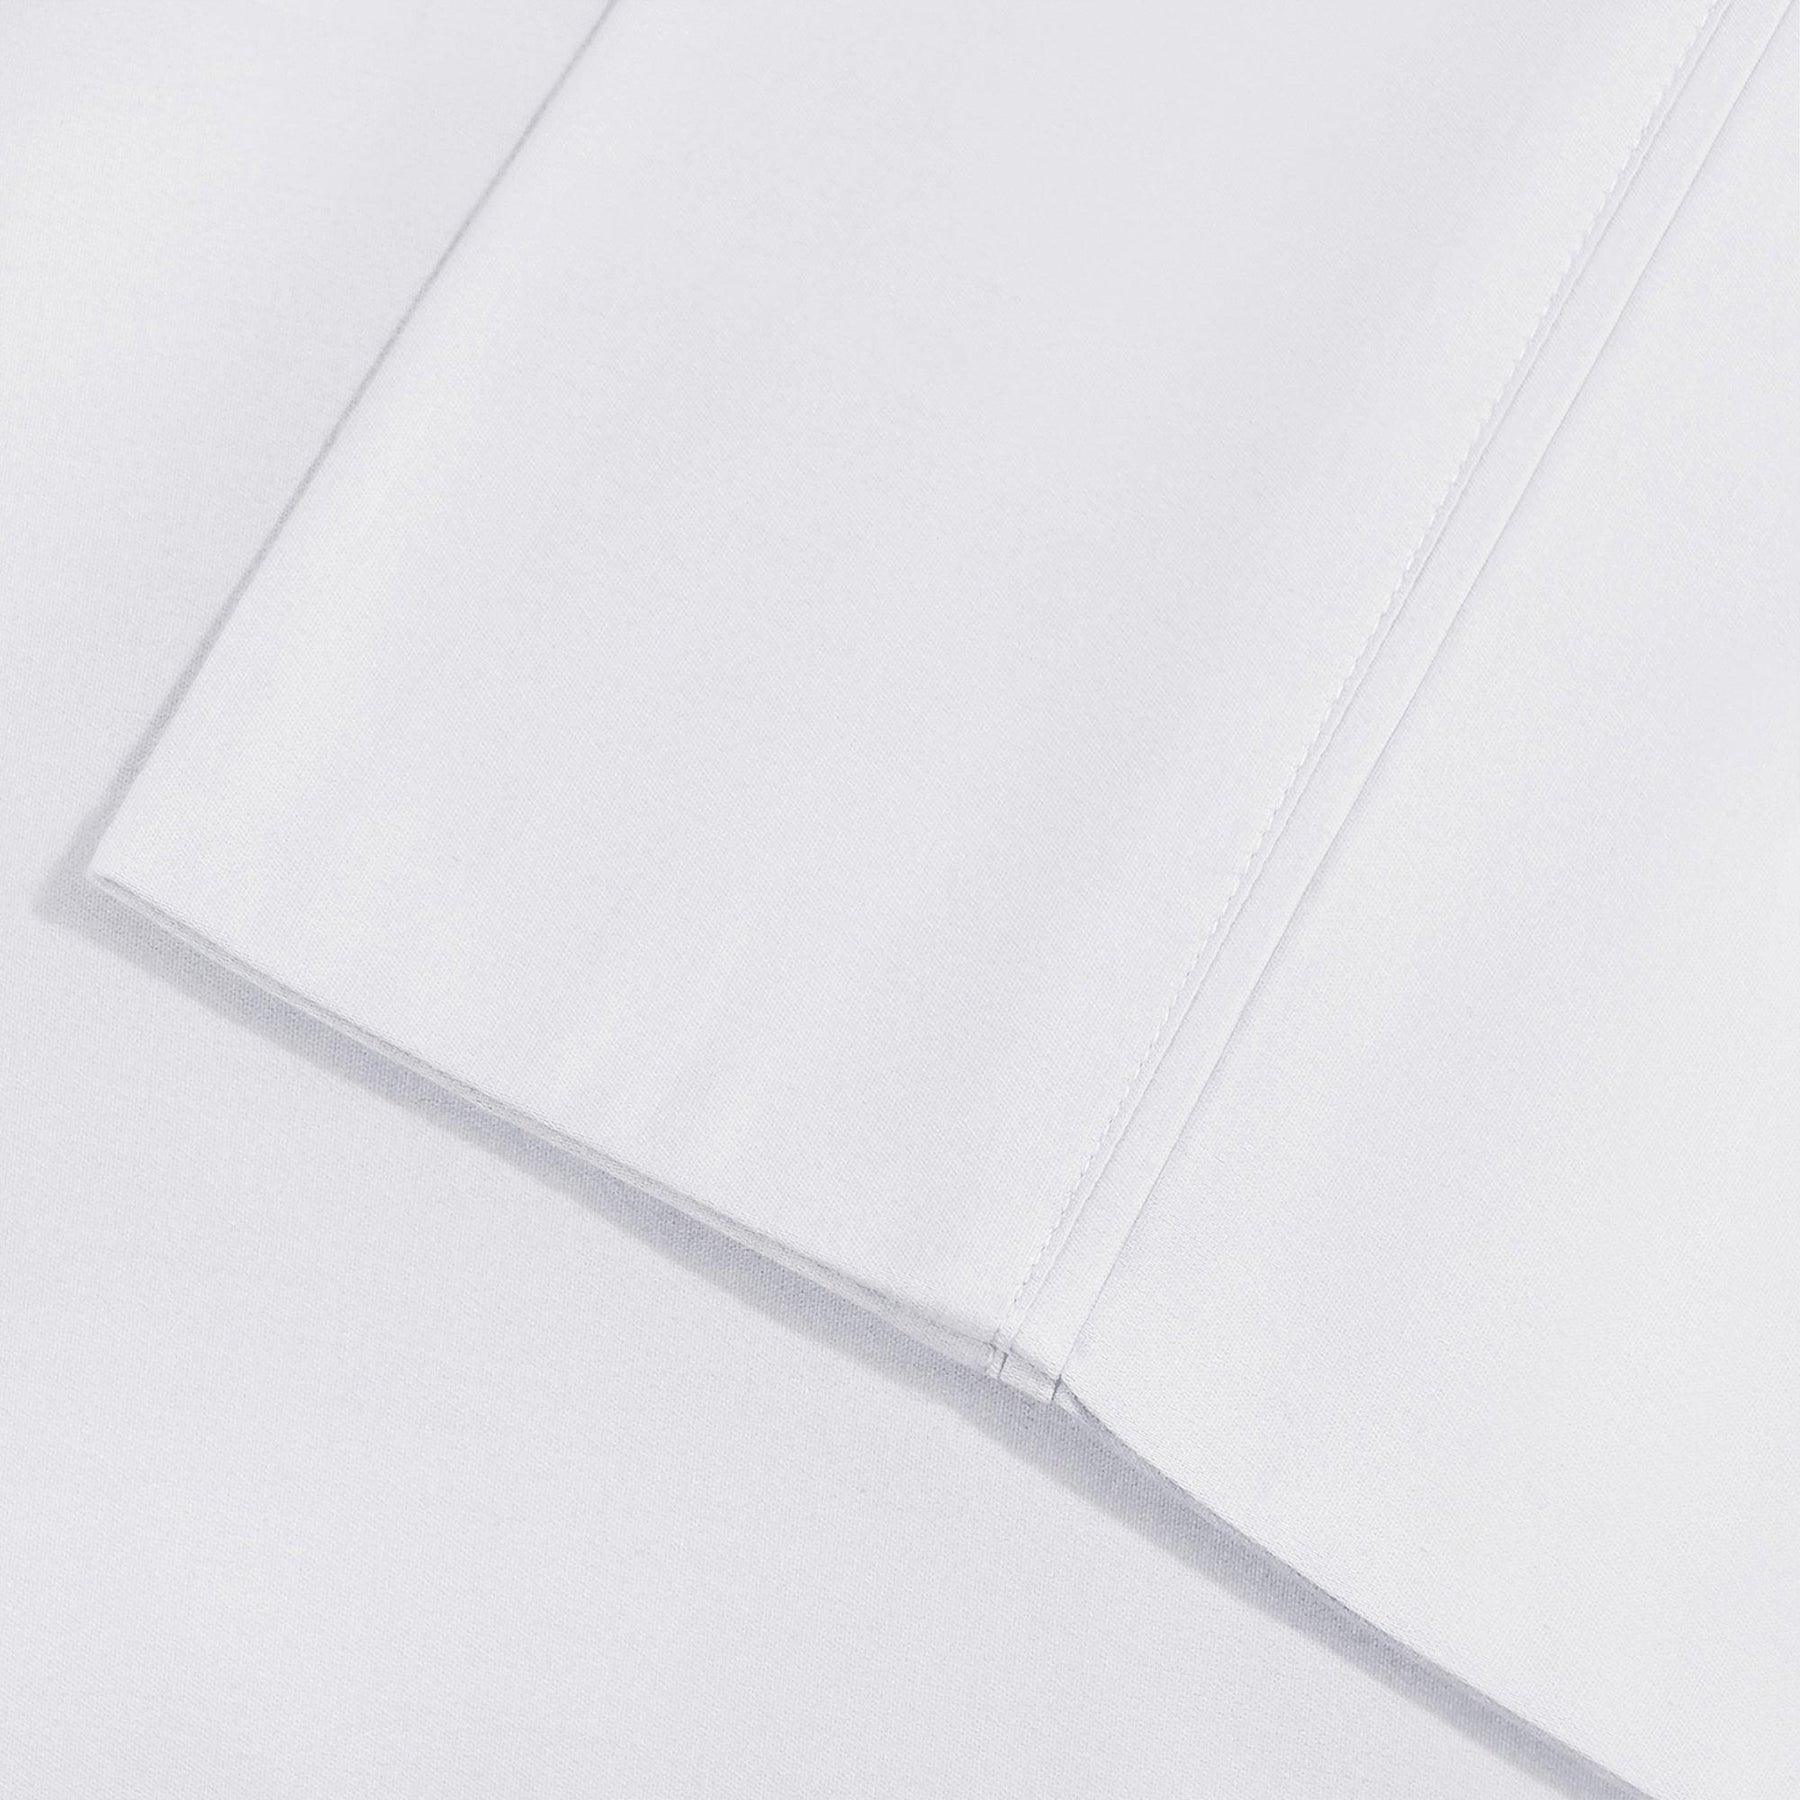  Superior Solid Count Cotton Blend Deep Pocket Sheet Set - White